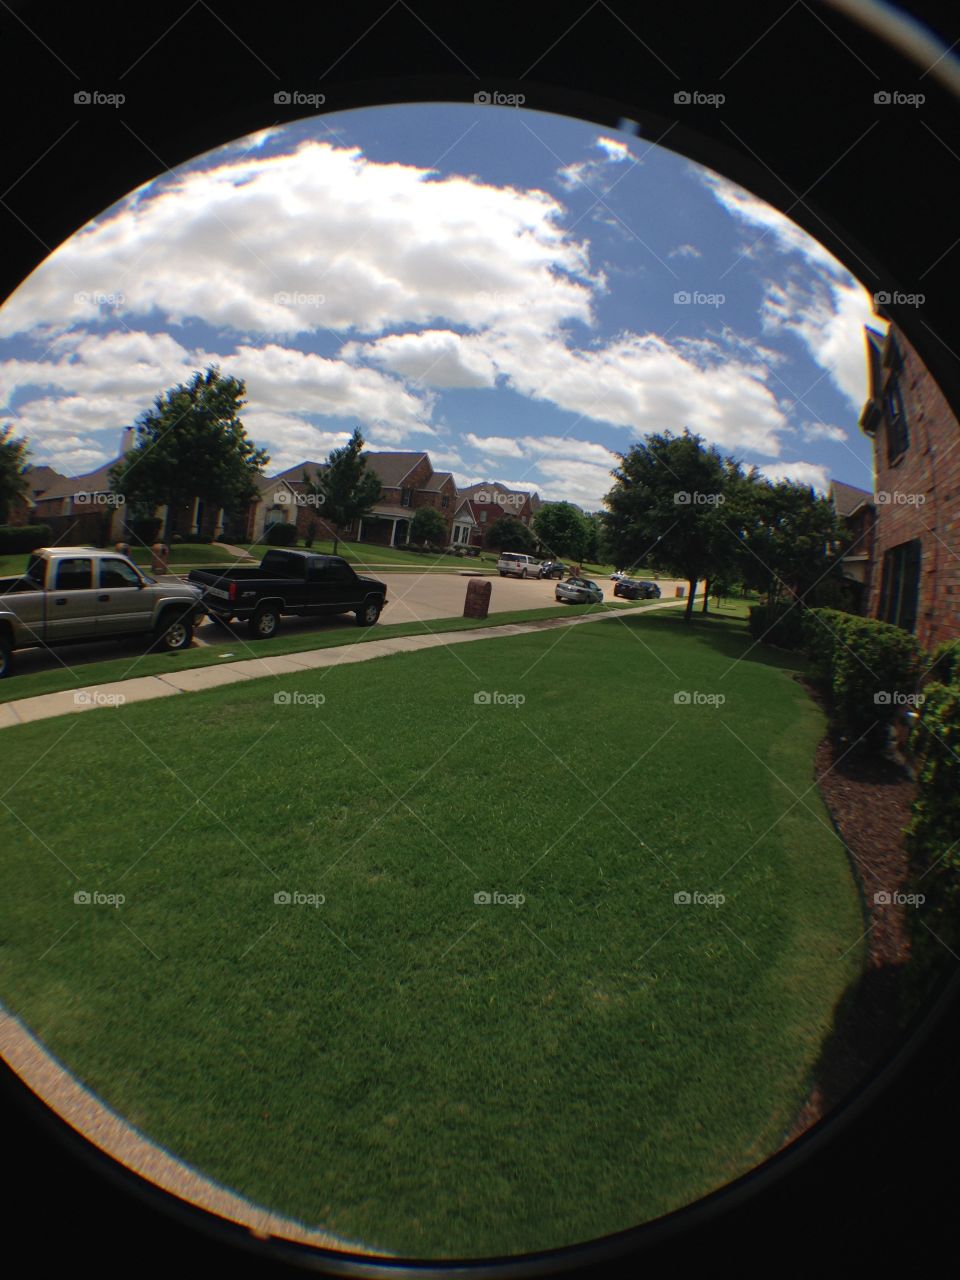 Fish bowl view. View of neighborhood through a fishbowl lens